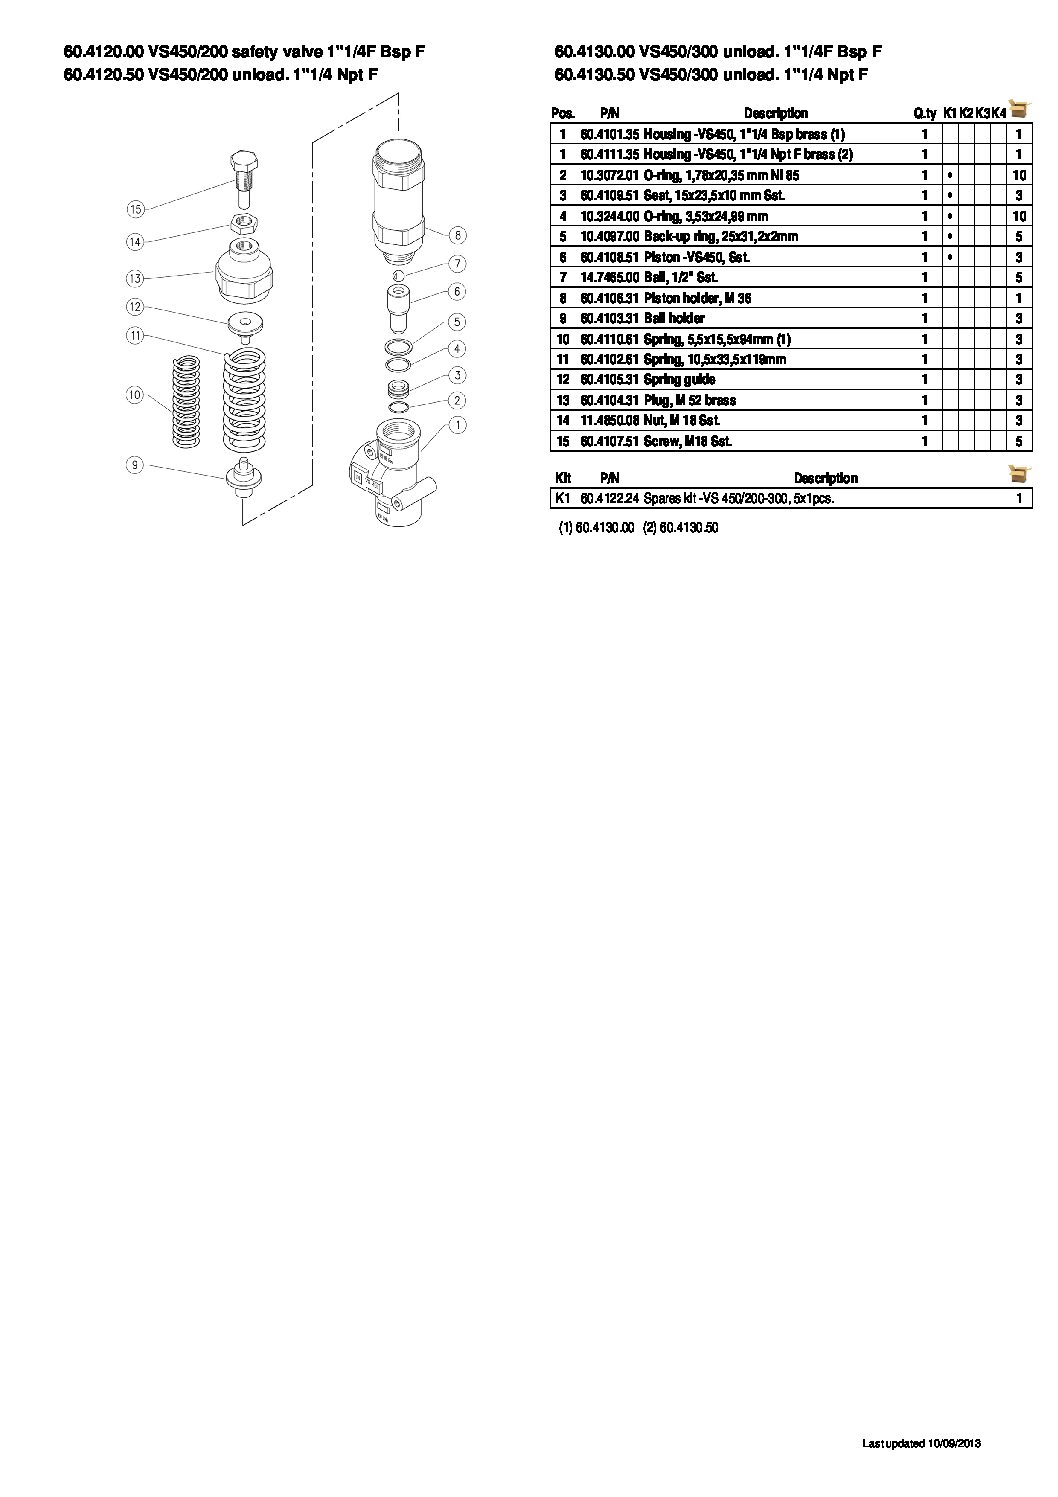 PA VS450 safety valve parts breakdown